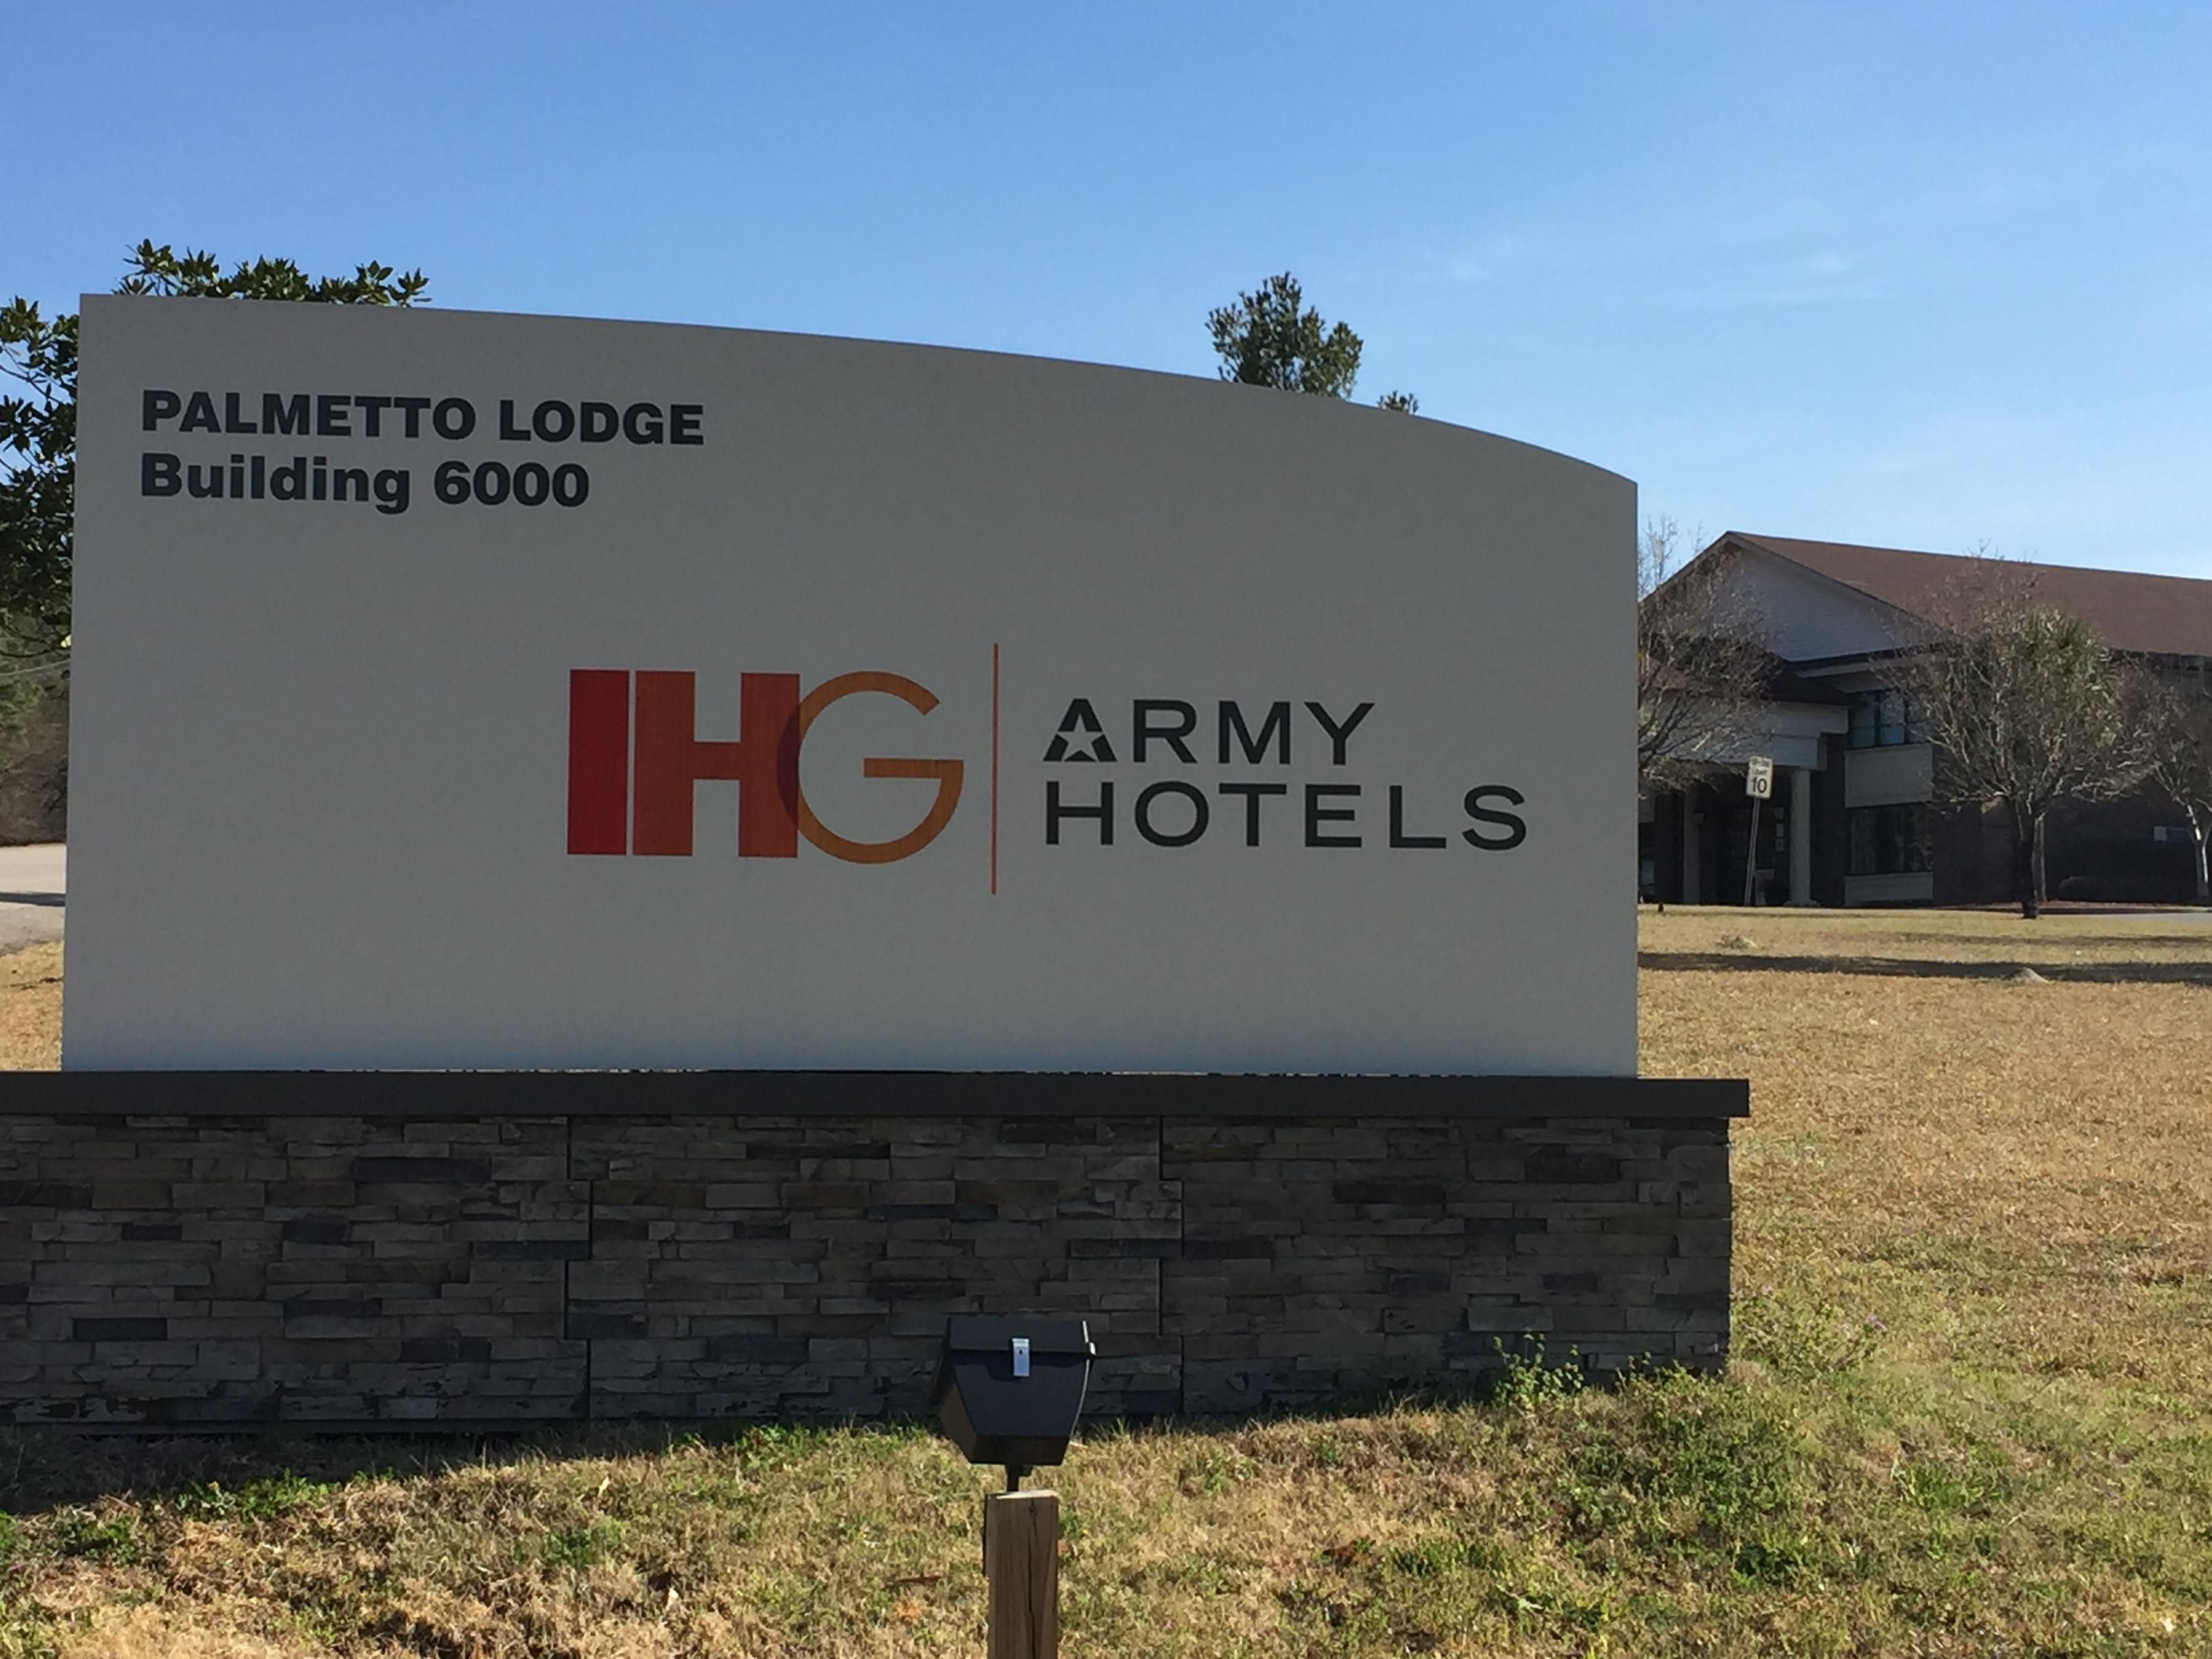 IHG Army Hotels Dozier Hall & Palmetto on Fort Jackson